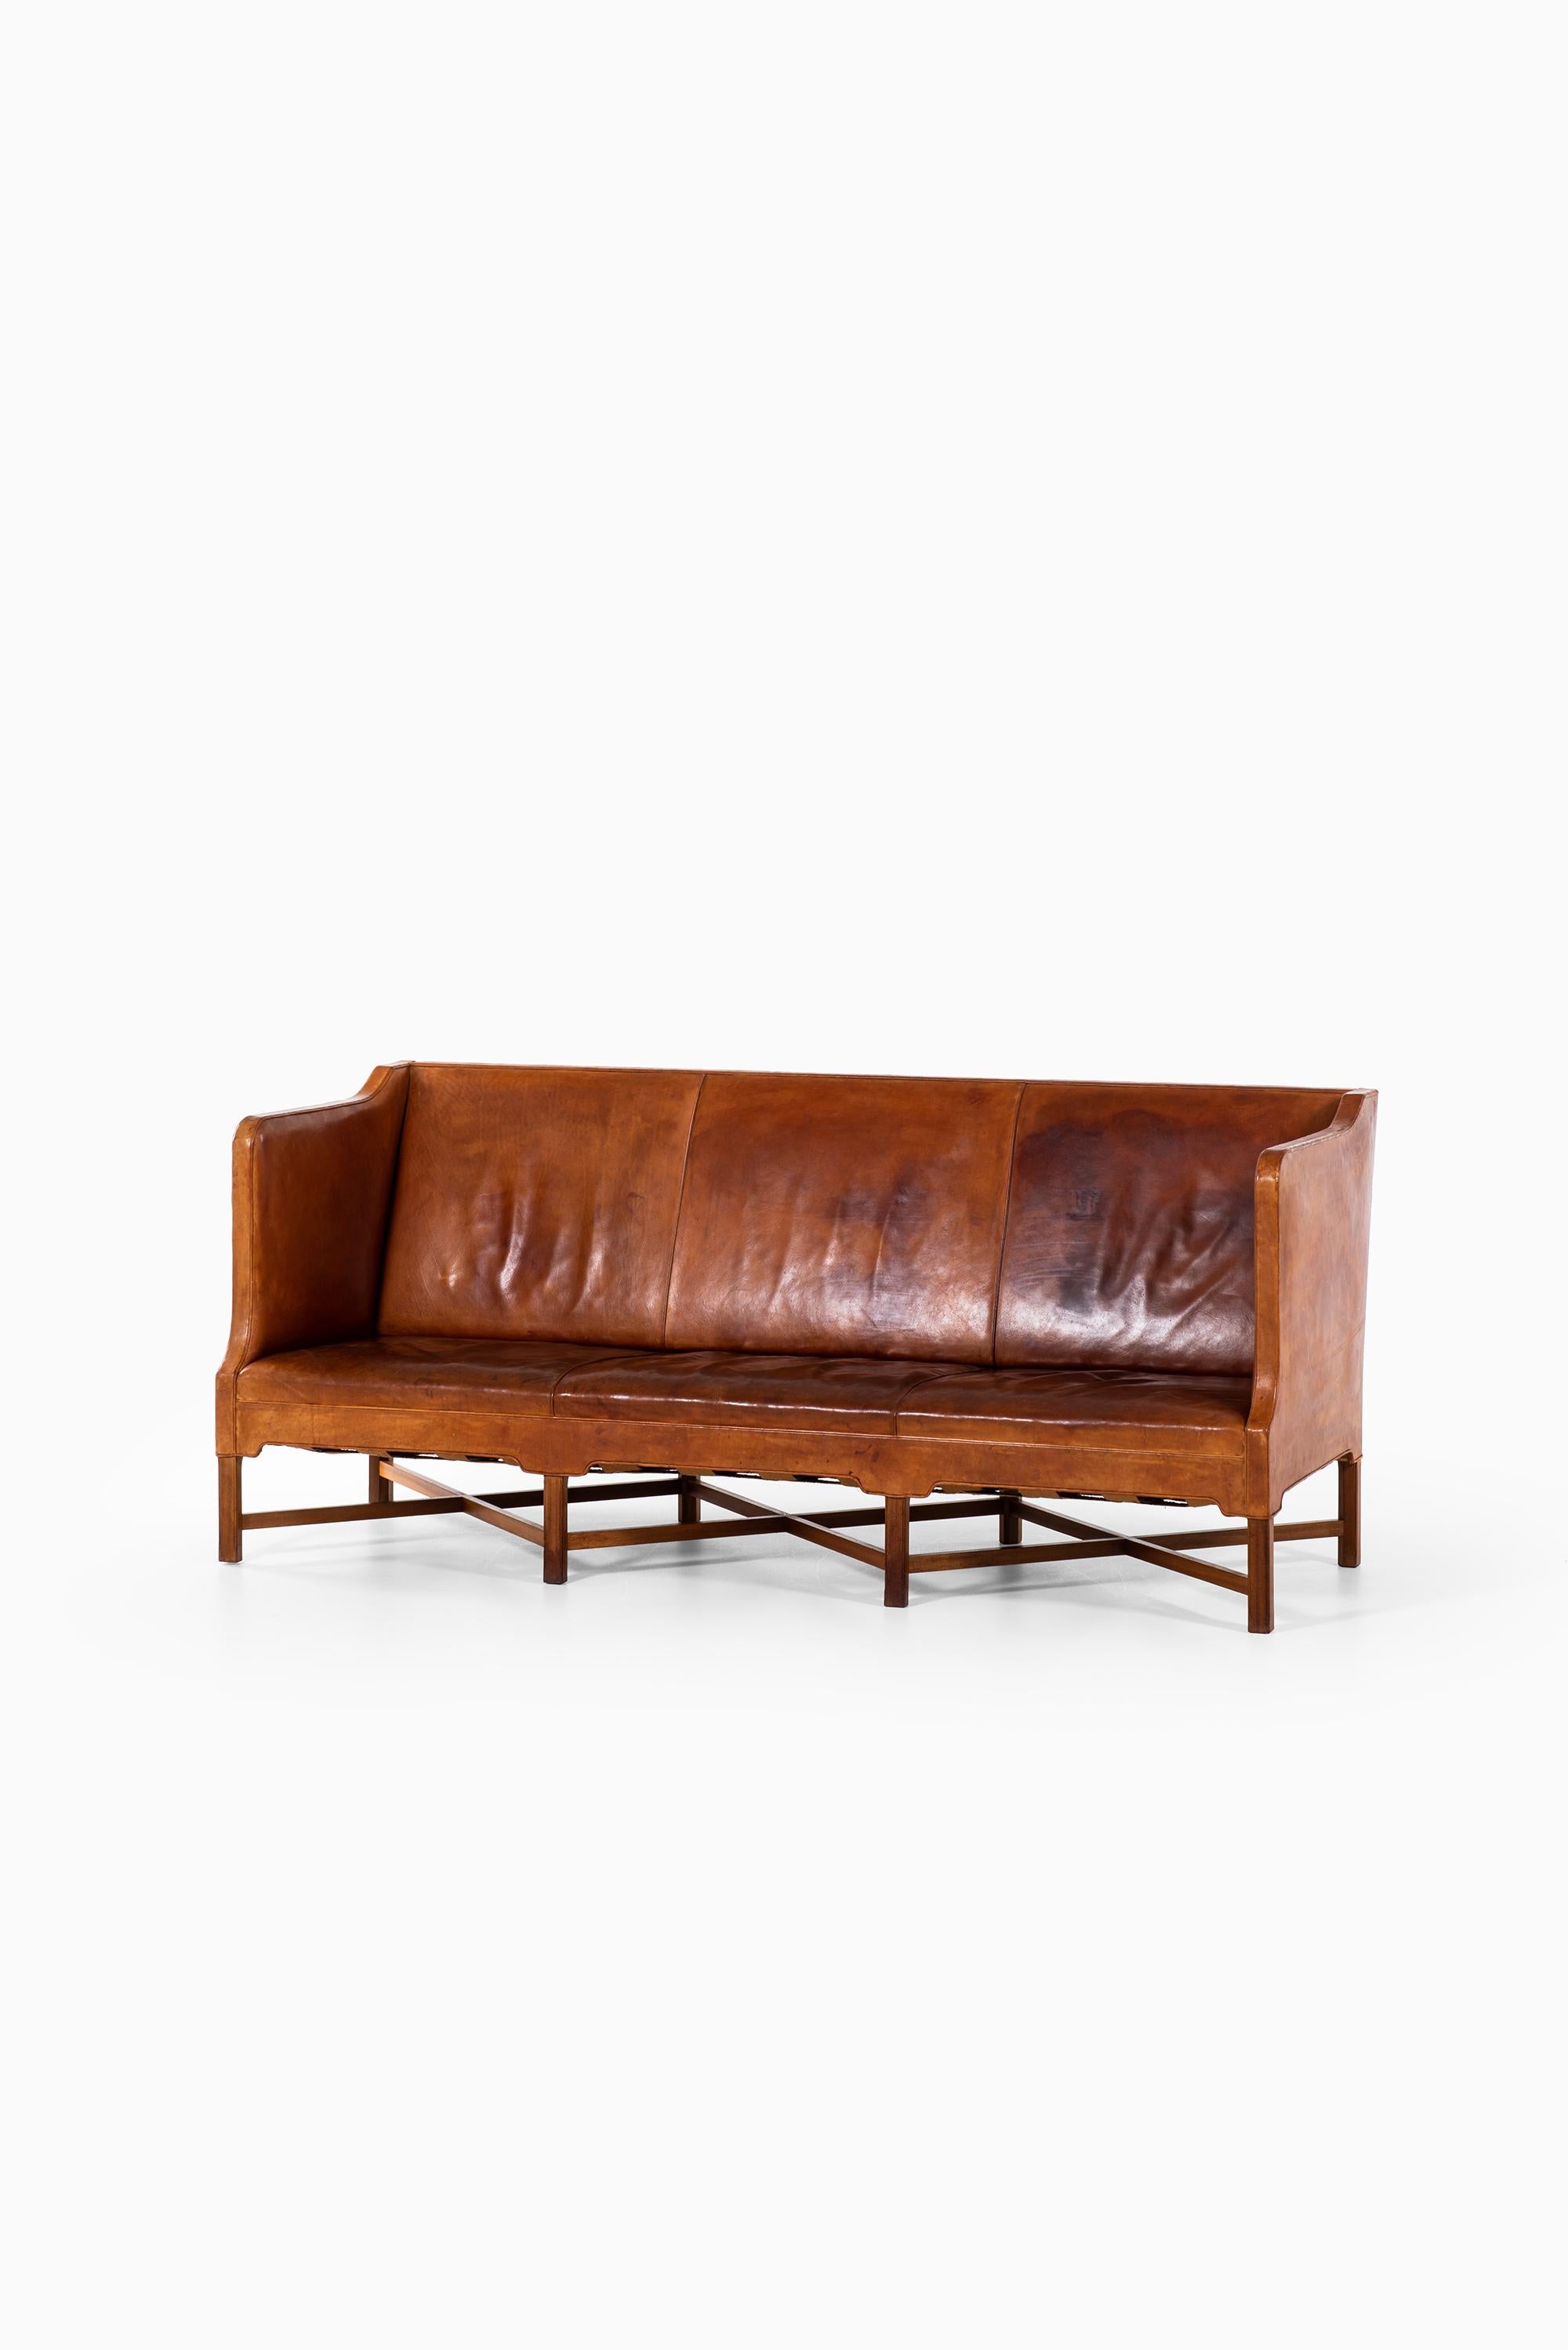 Kaare Klint Sofa Model No 4118 Produced by Rud. Rasmussen in Denmark 8